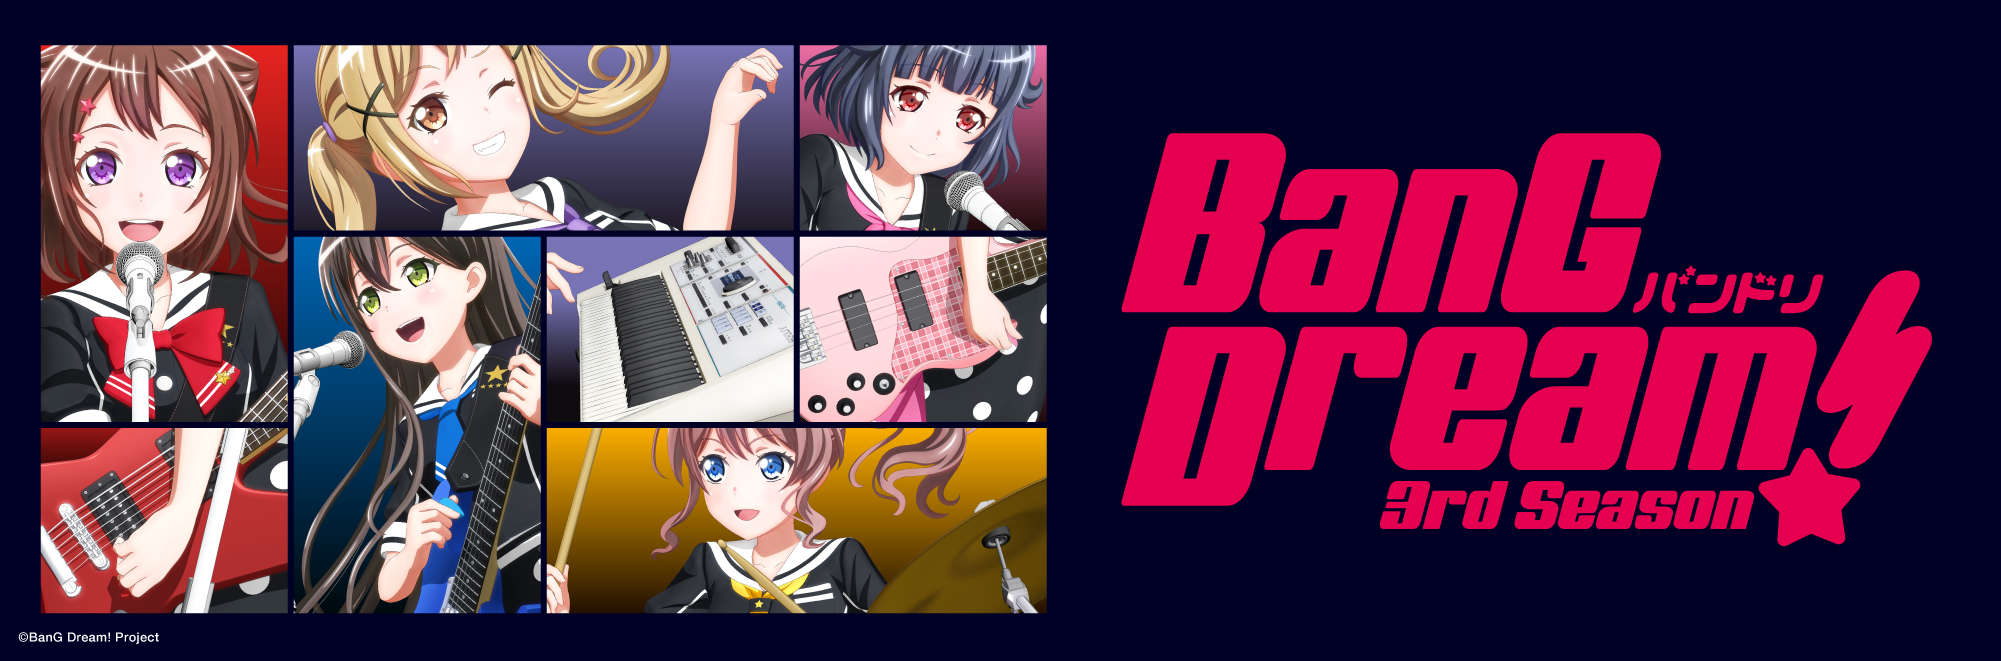 BanG Dream! 3rd Season | Anime | BanG Dream! Official Website